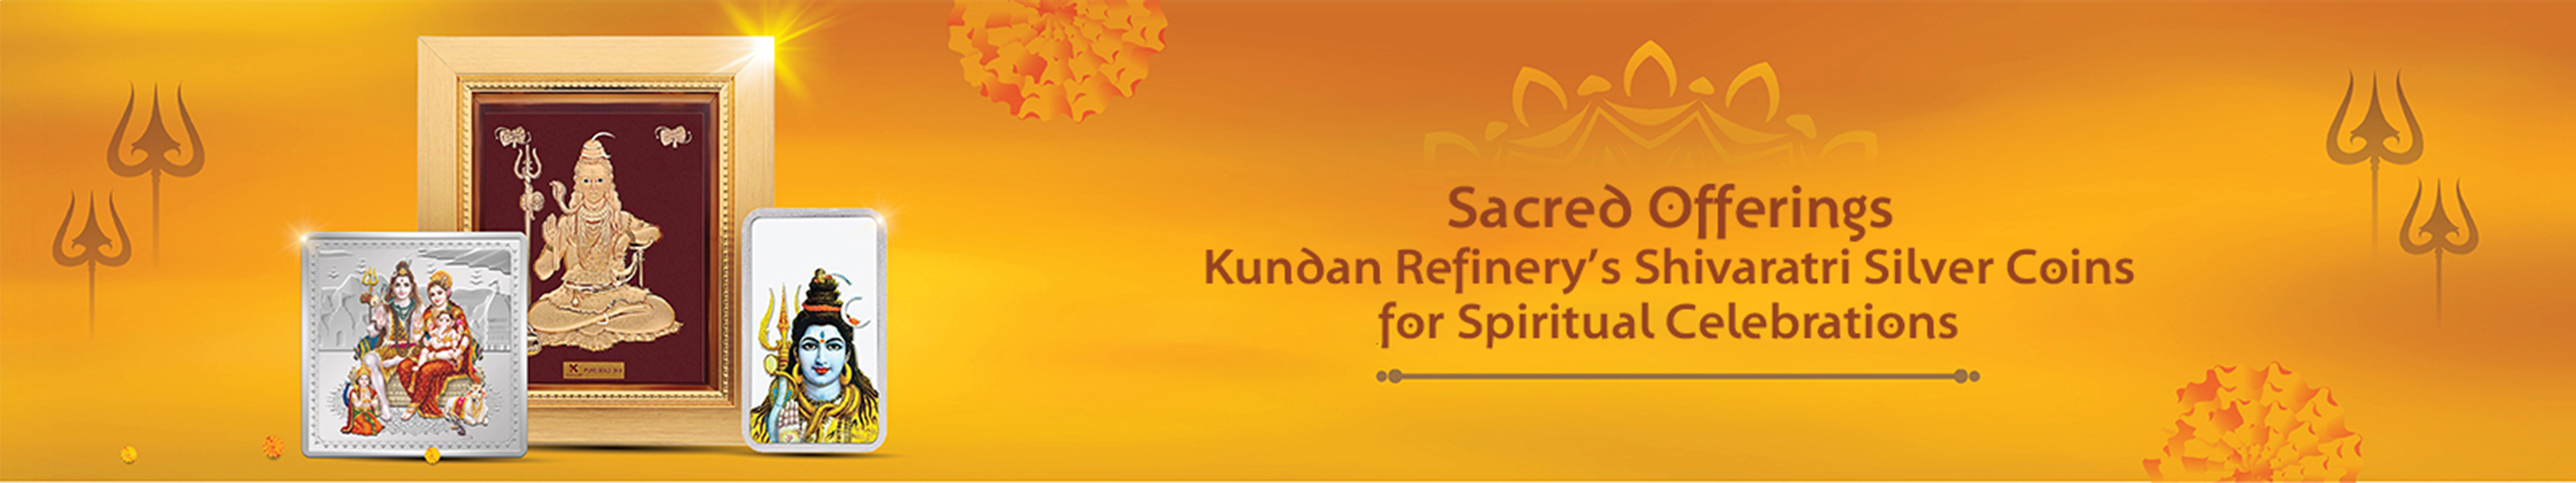  Kundan Refinery’s Shivaratri Silver Coins for Spiritual Celebrations